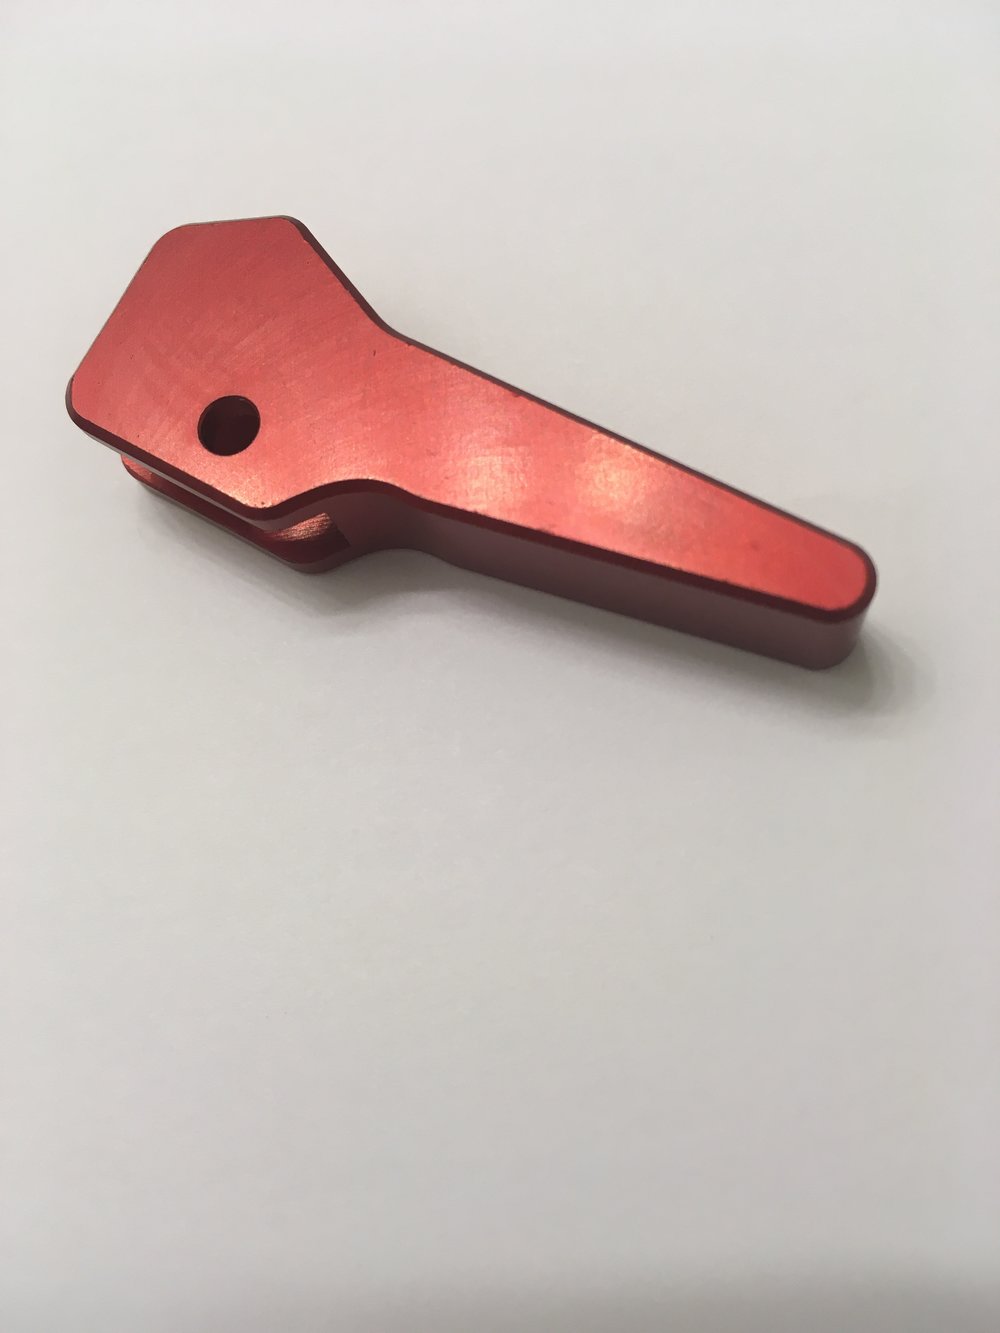 Billet Aluminum Choke Lever red anodized